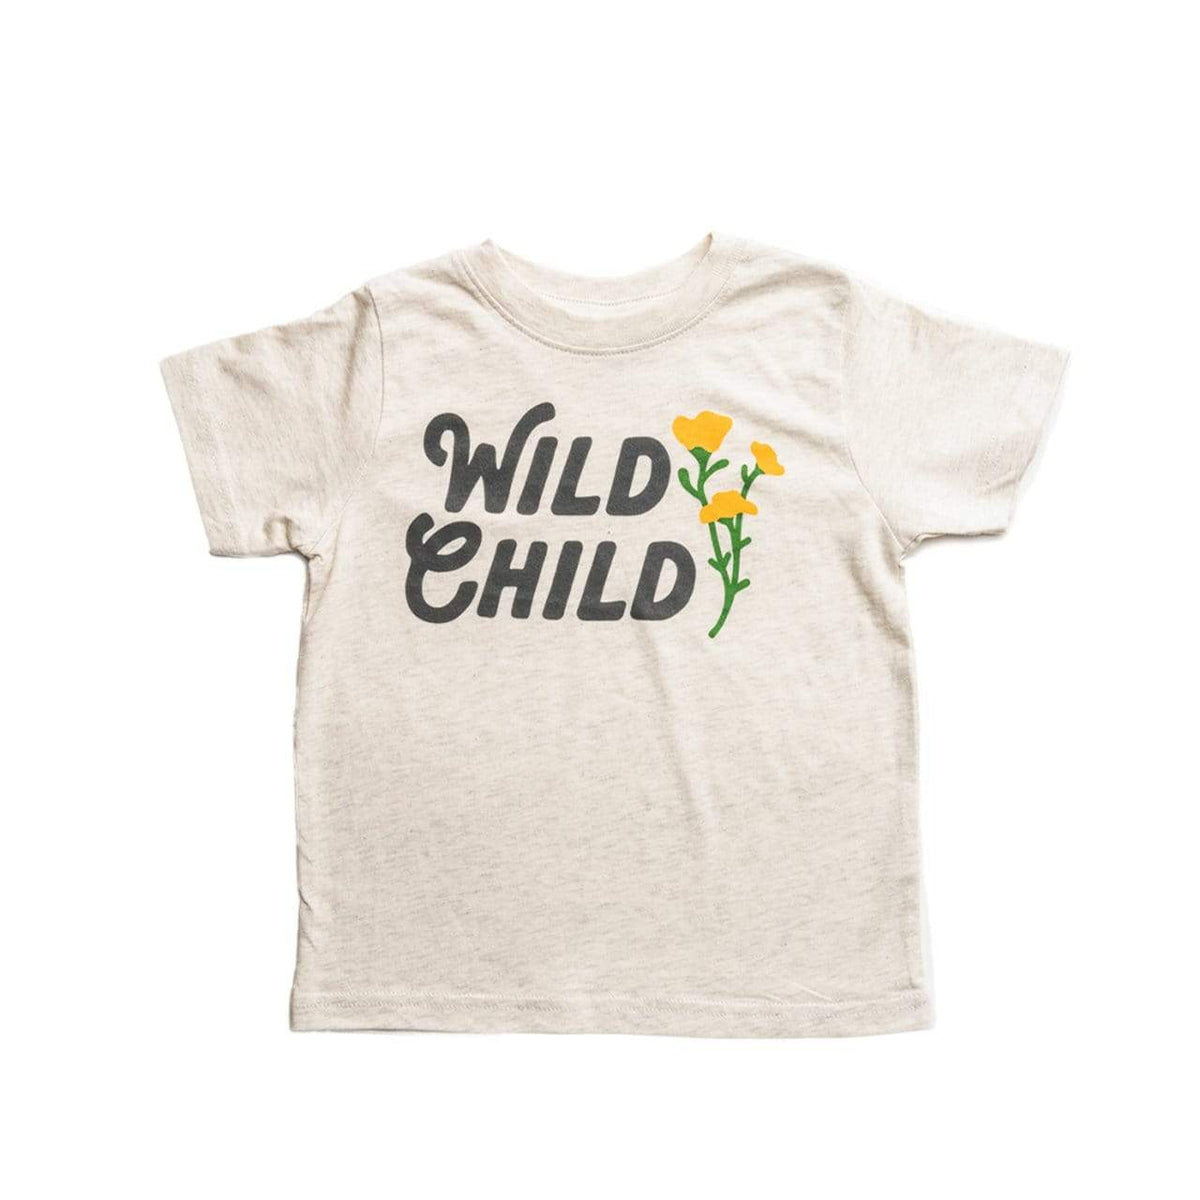 Wholesale Nature Smile Kids Baby Children Toddler Wooden Shirt